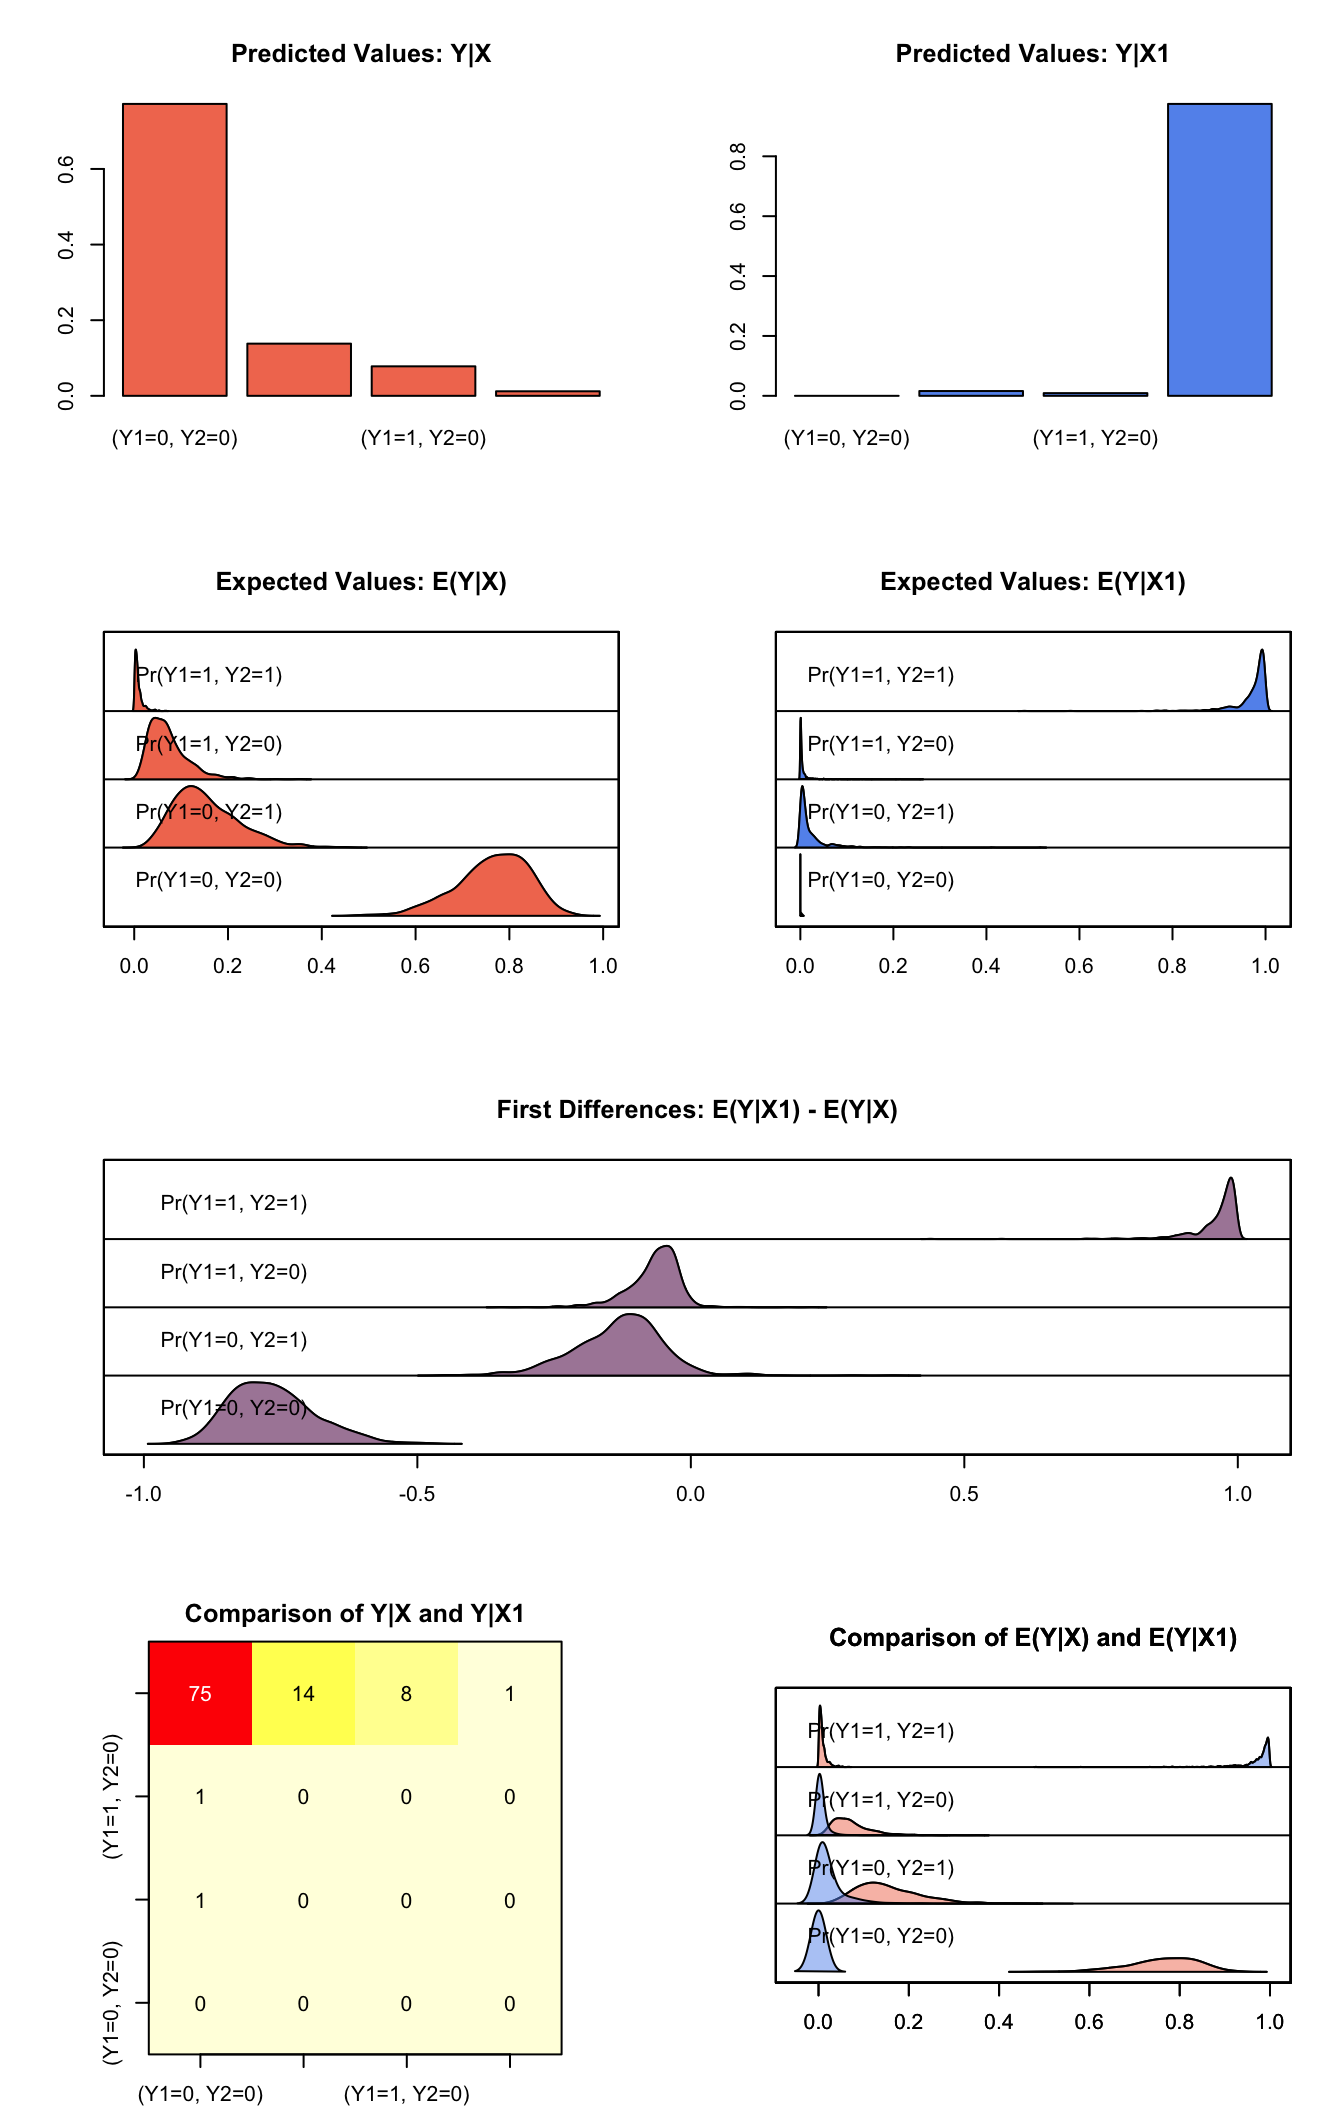 Graphs of Quantities of Interest for Bivariate Logit